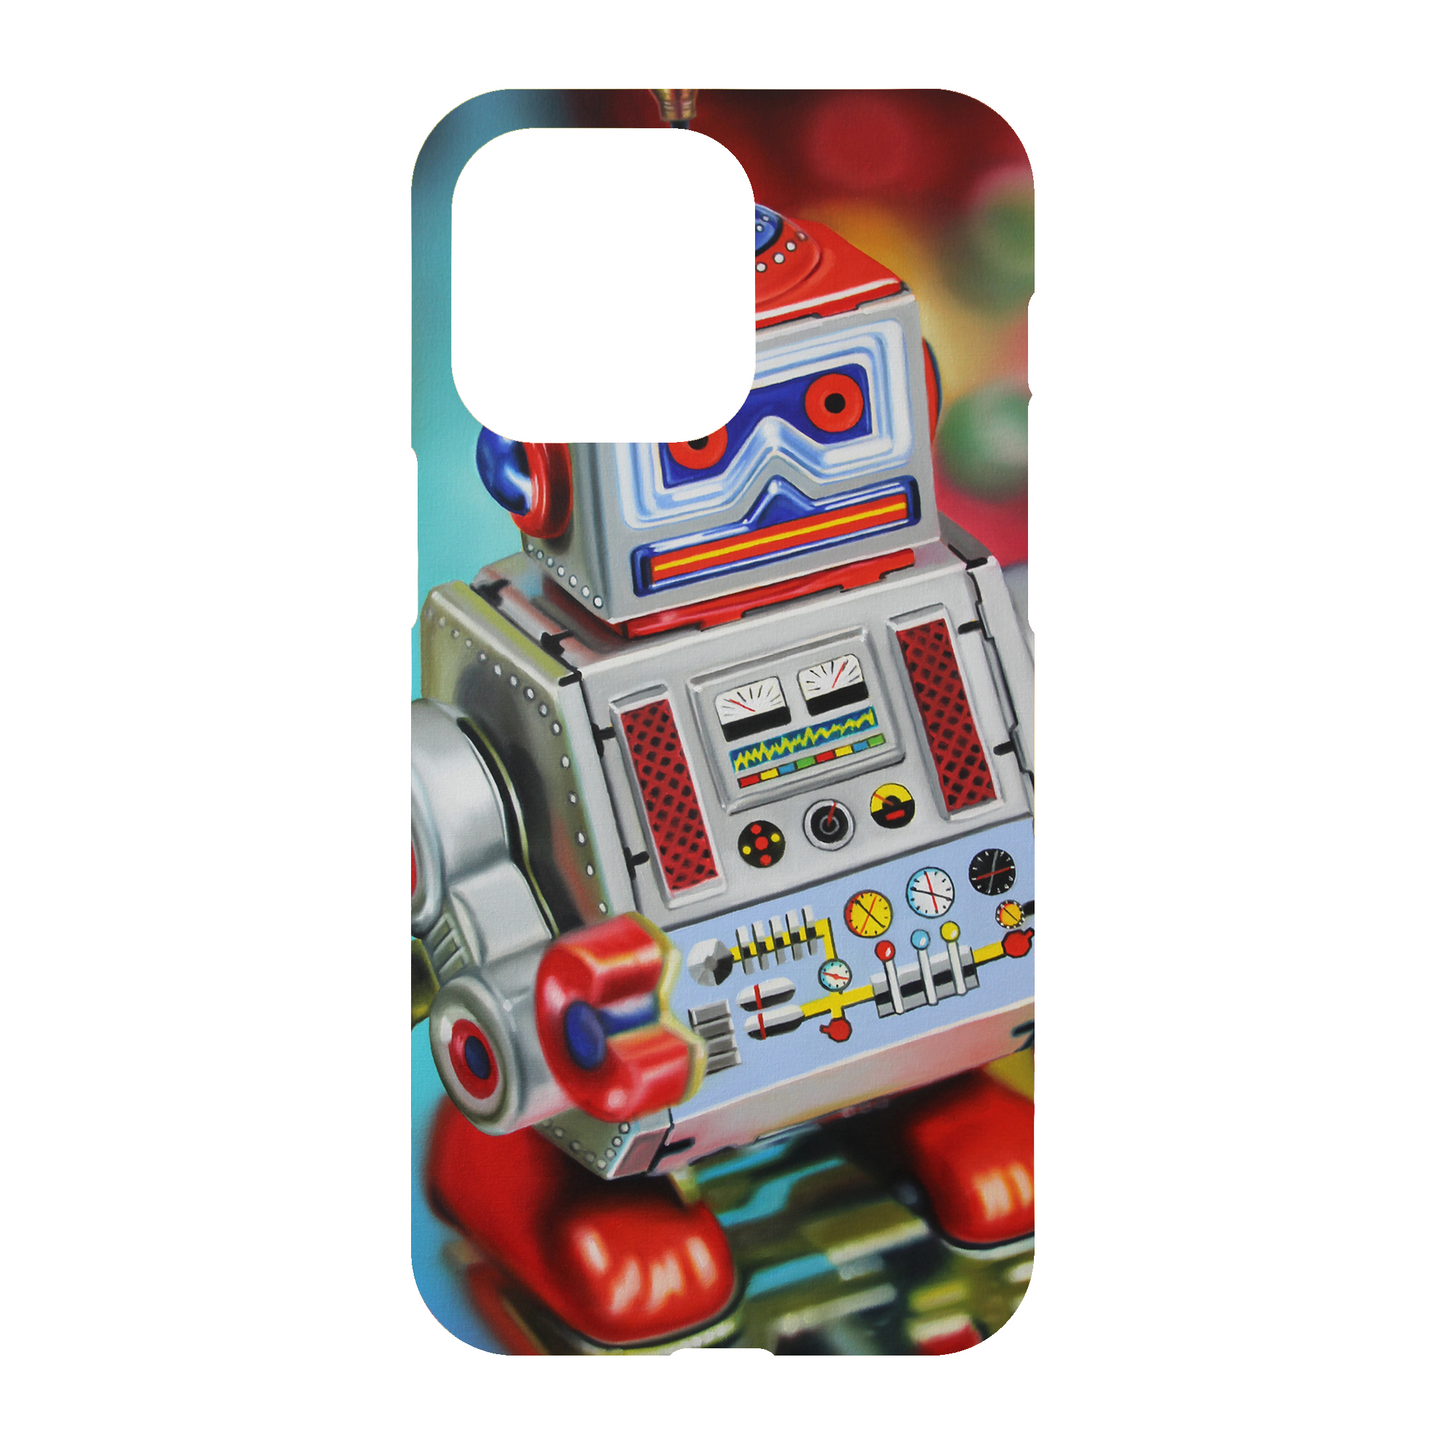 Mr Robotto Snap Phone Case - alternative phone models